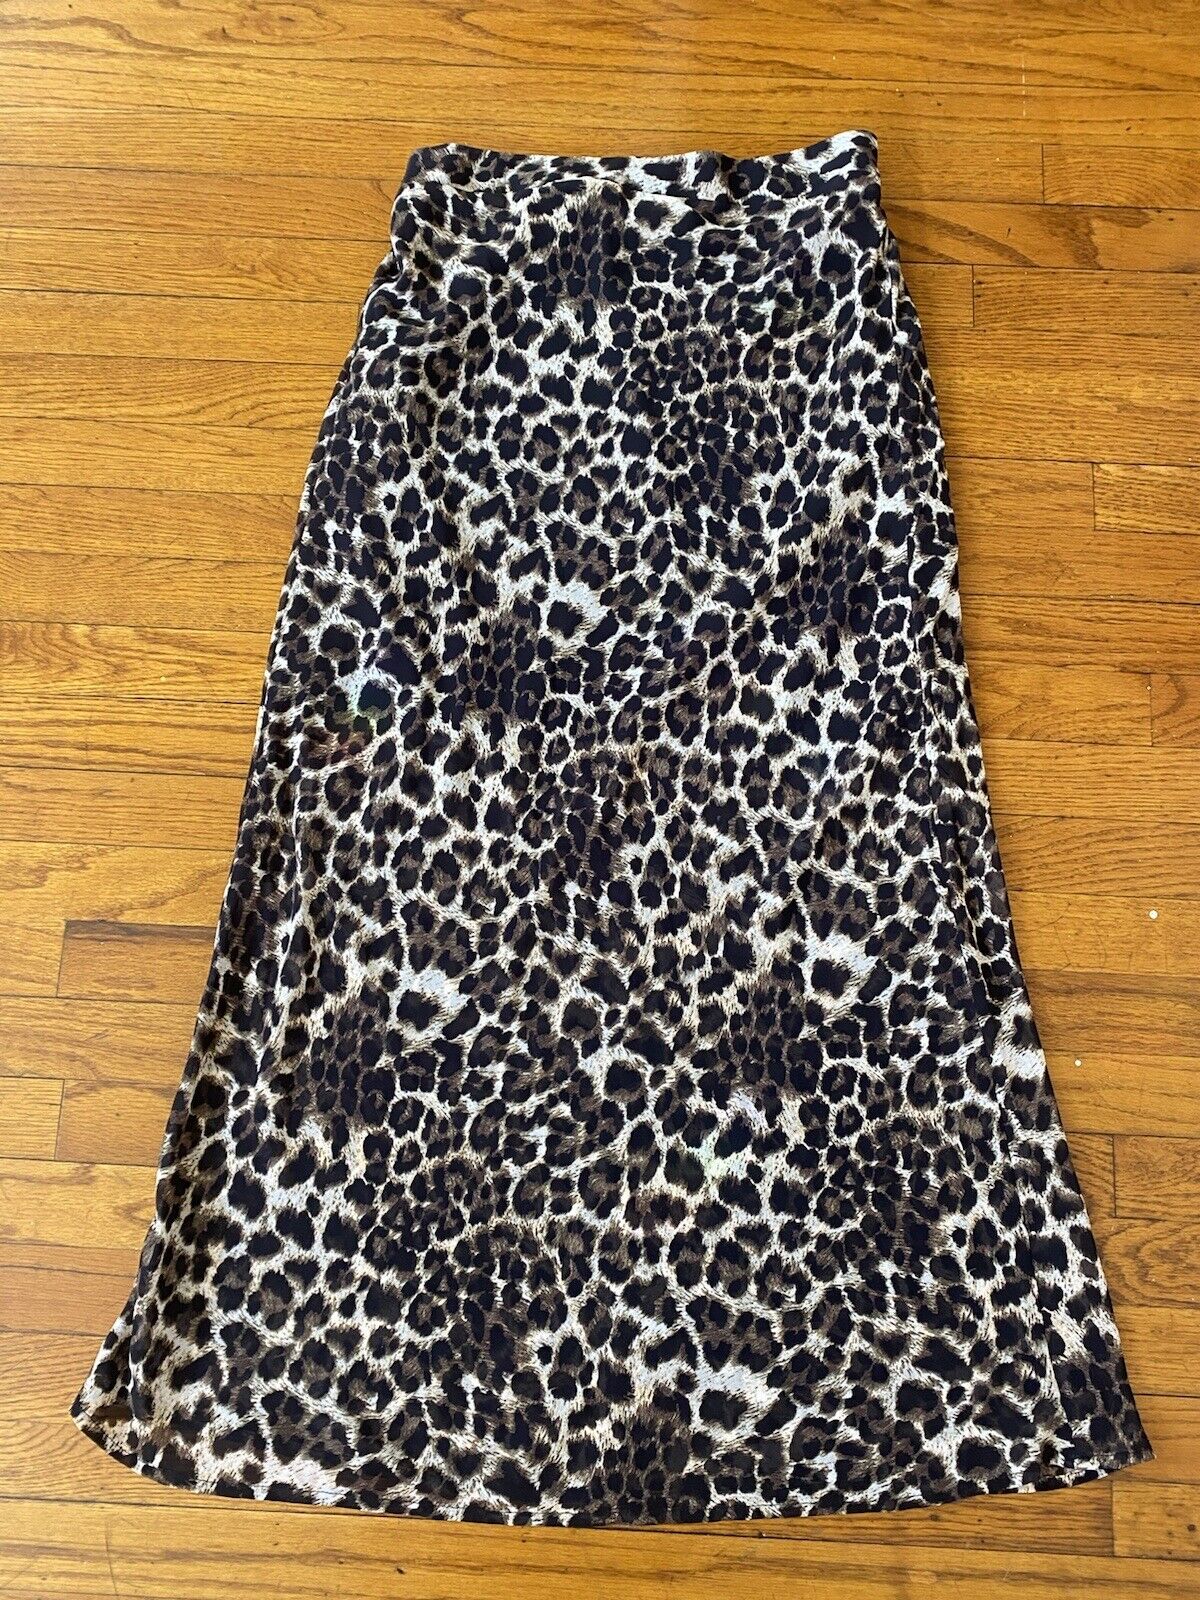 Leopard Print Maxi Skirt - Know One Cares - Women’s Medium # 2681